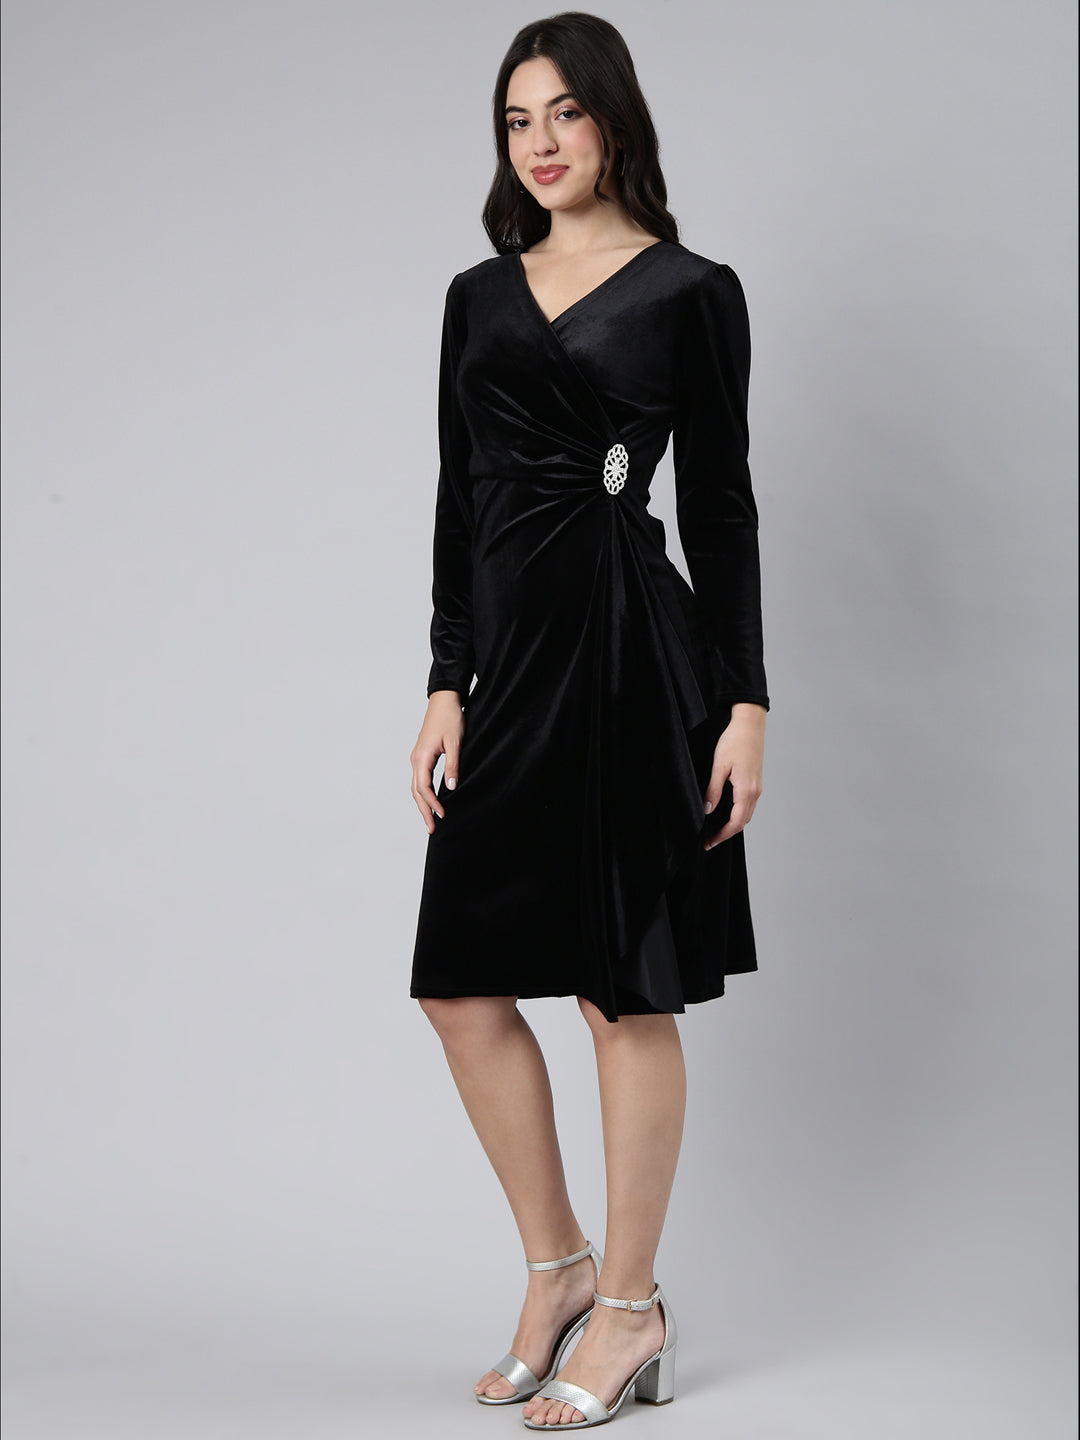 Women Solid Black A-Line Dress